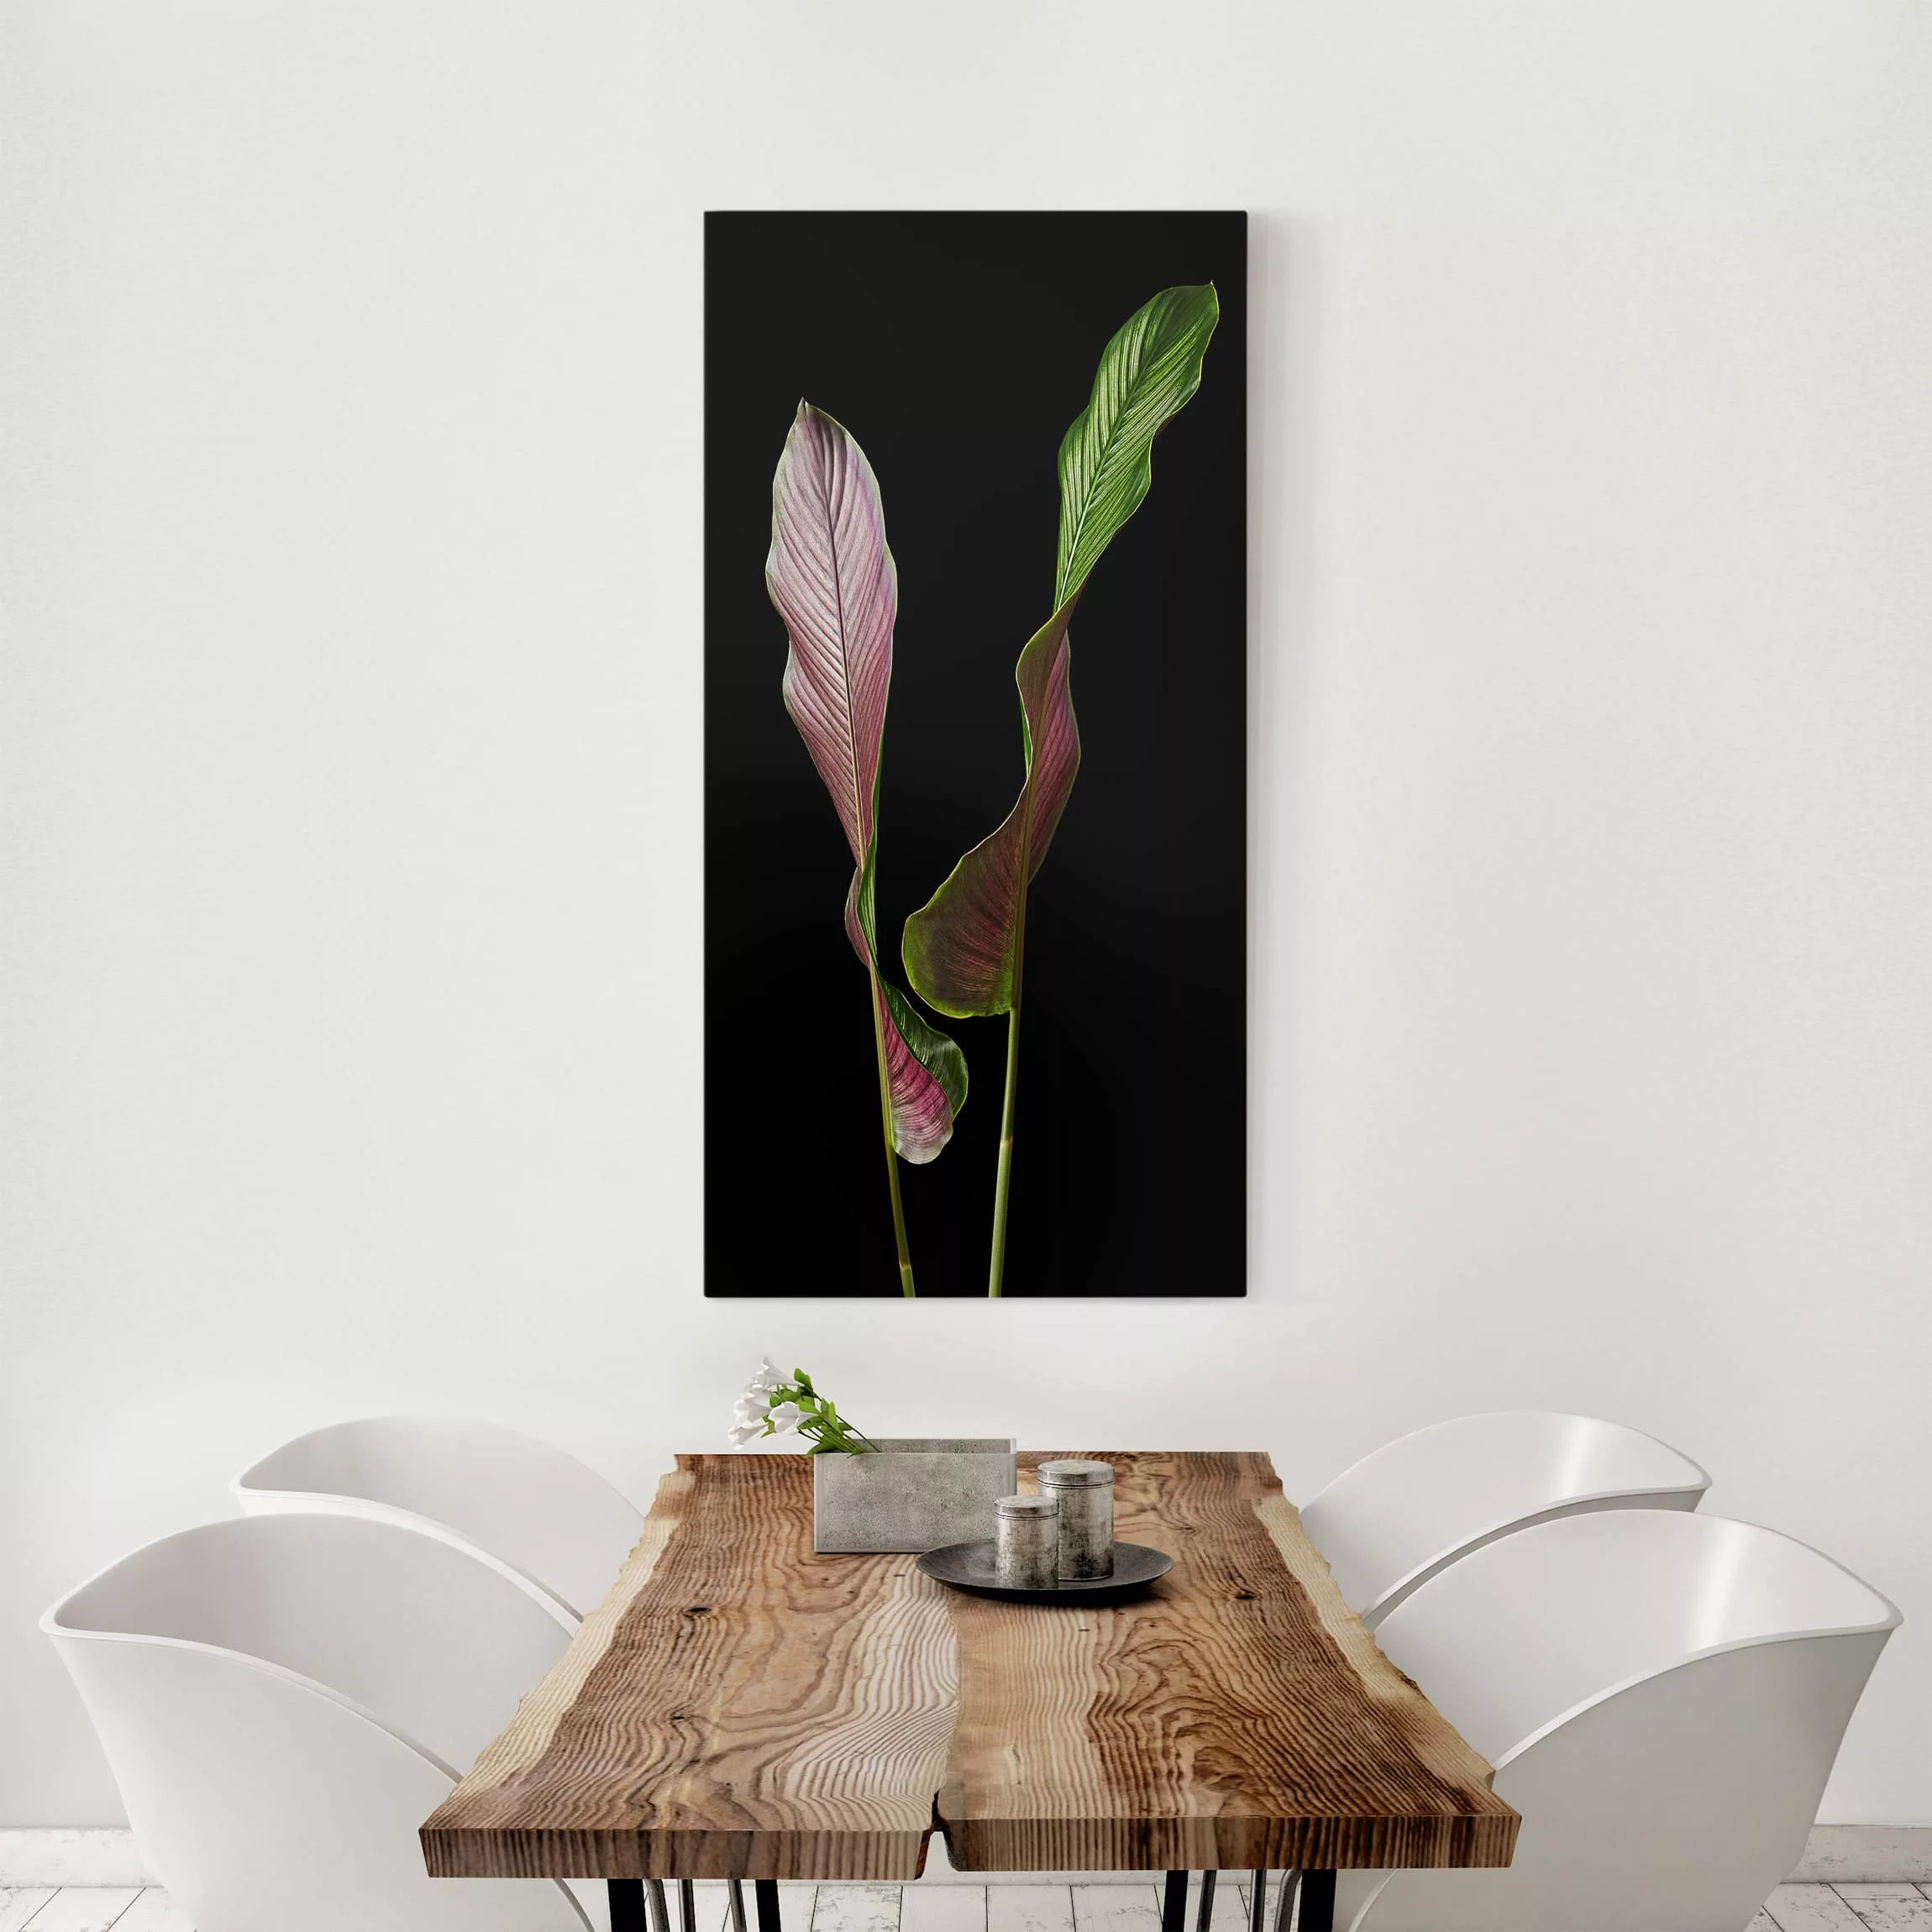 Leinwandbild Botanik - Hochformat Blatt Calathea-ornata auf Schwarz 01 günstig online kaufen